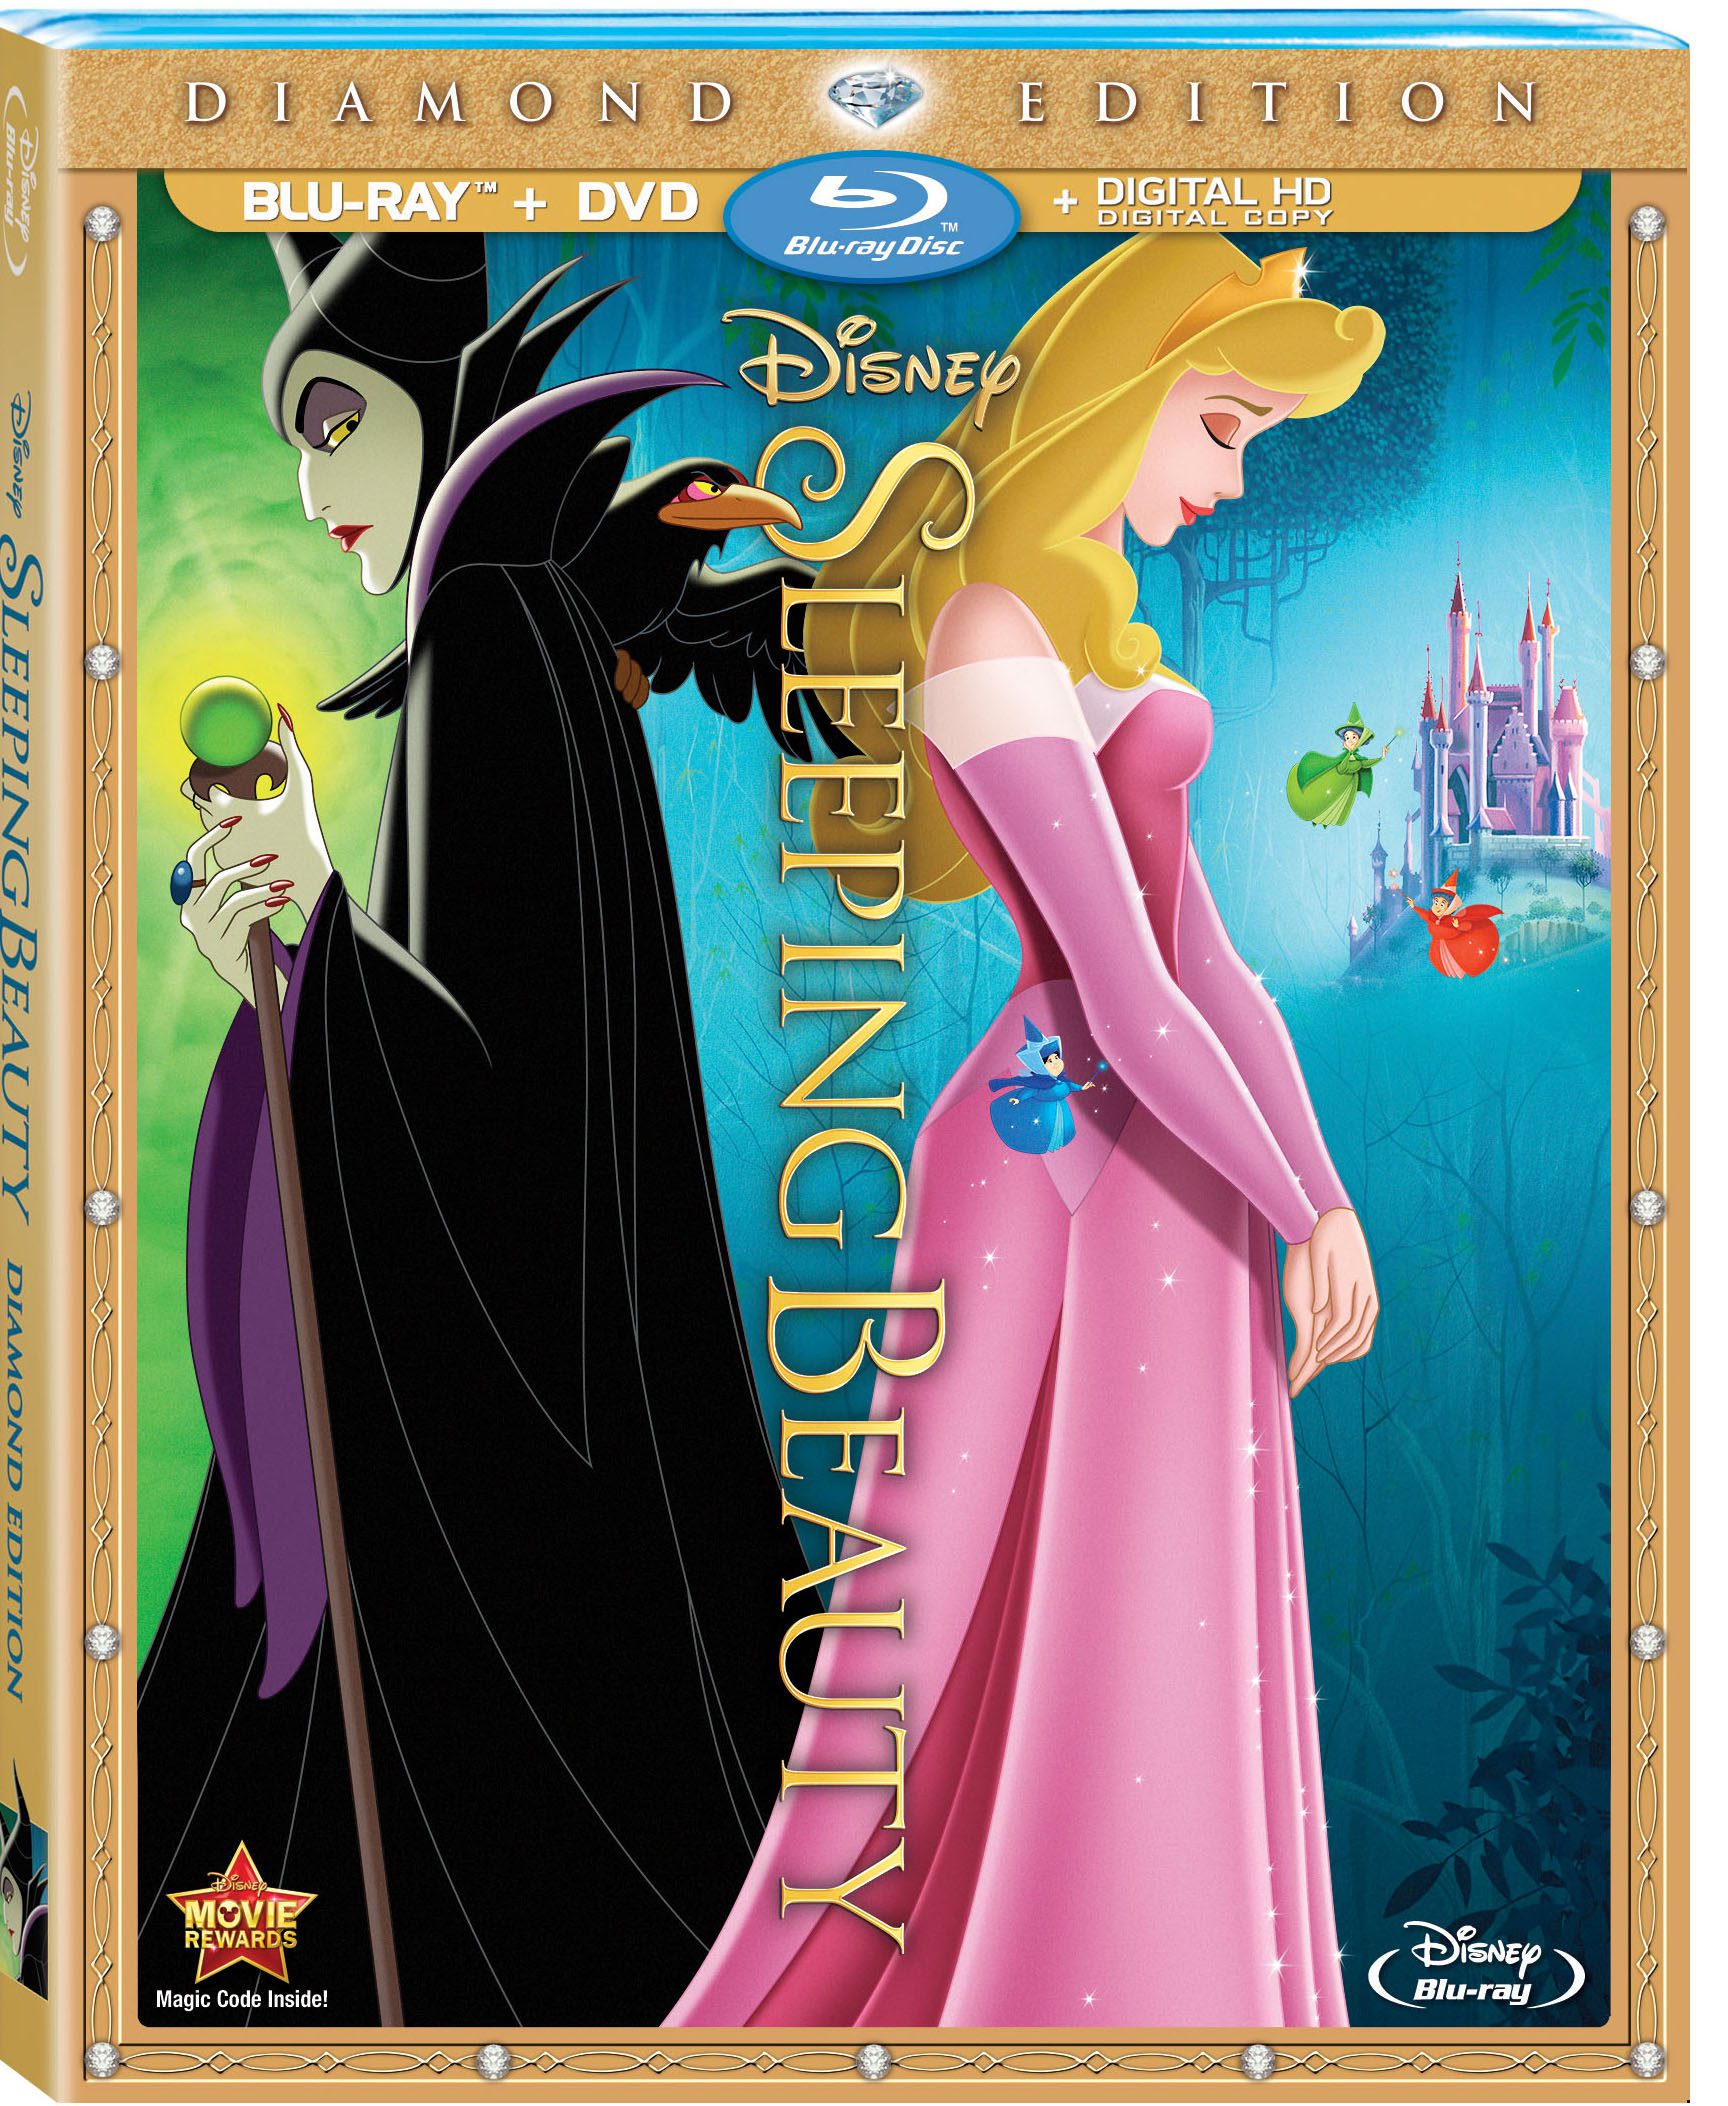 Sleeping Beauty Diamond Edition Blu-ray and Digital HD on October 7, 2014